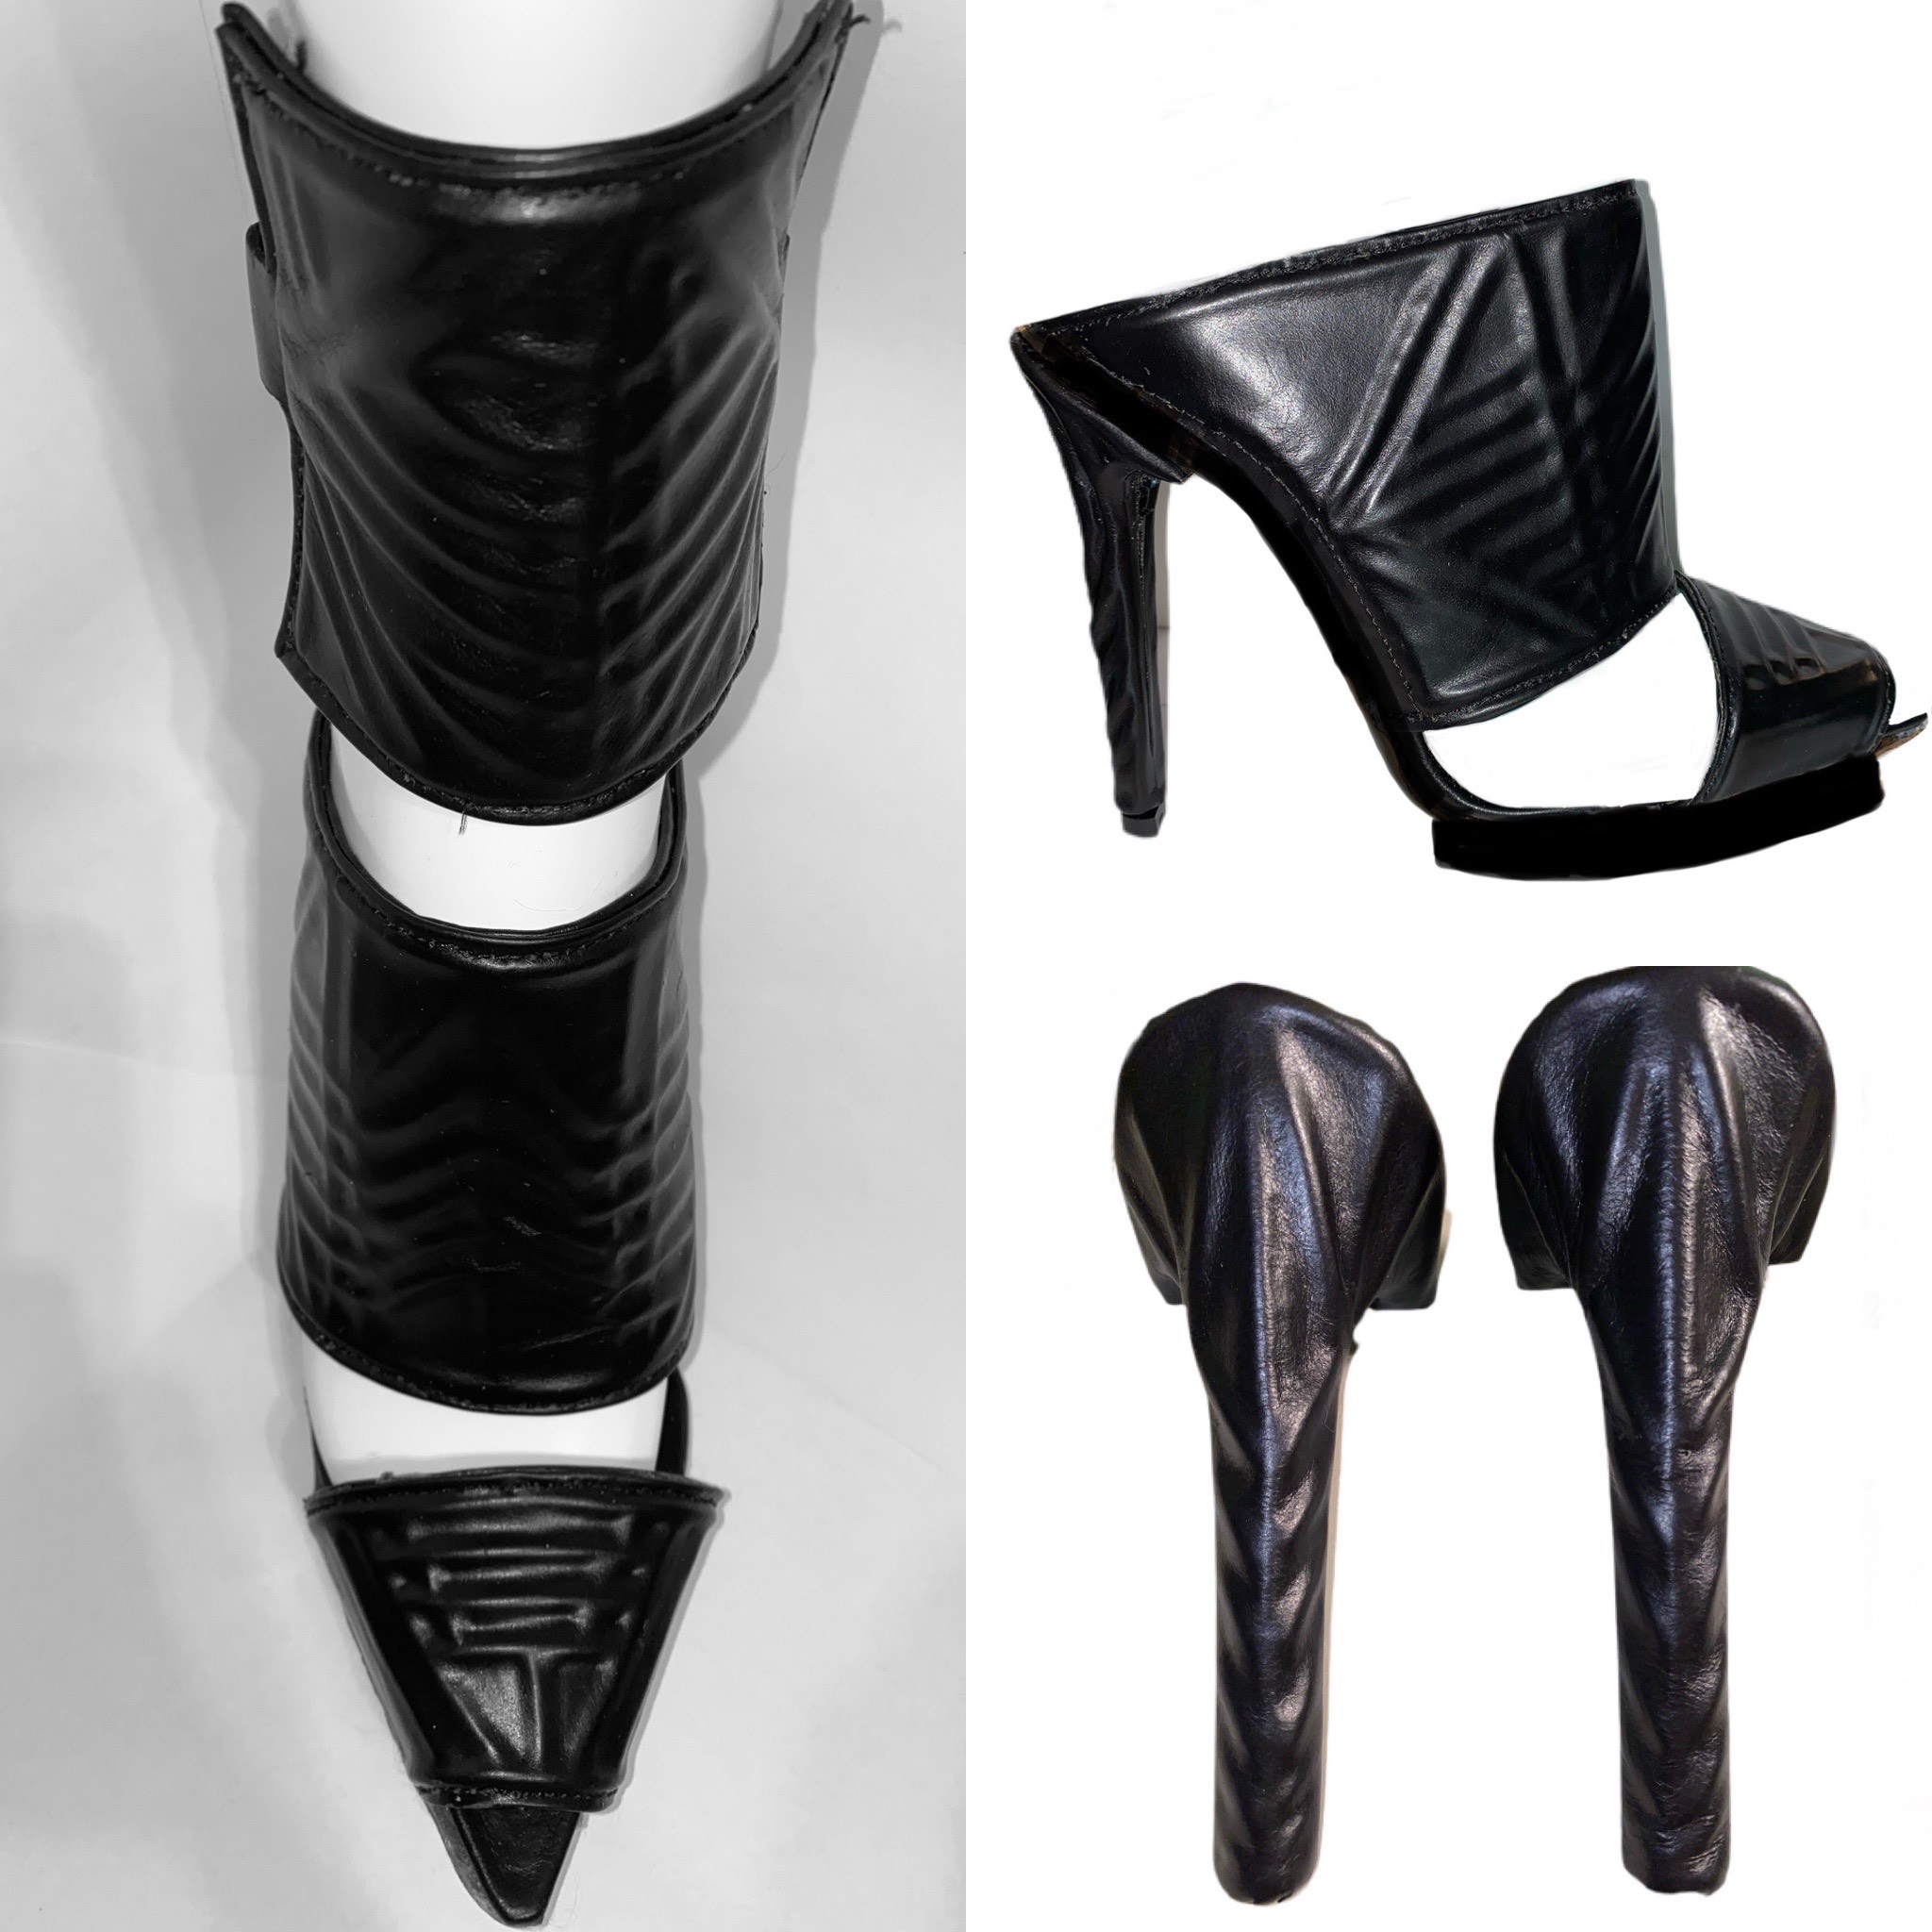 amanda germolec - ‘black inside LINES shoe’